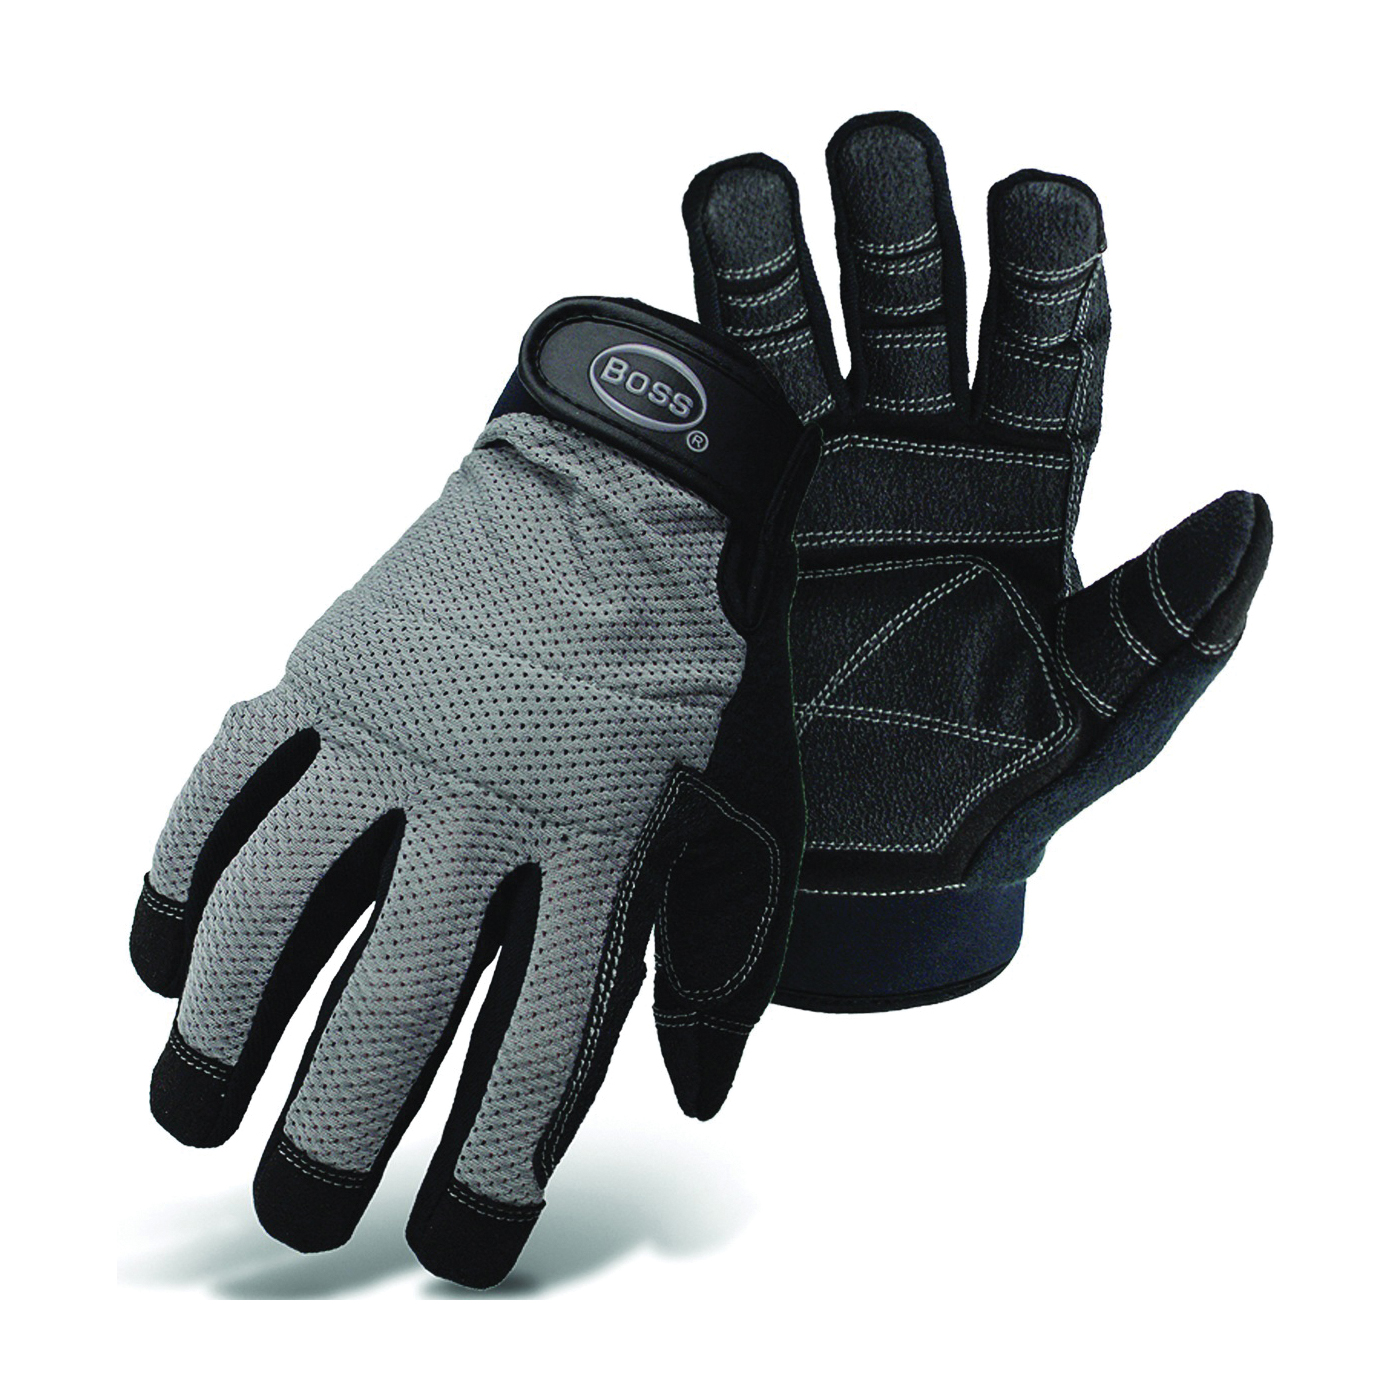 5204X Utility Mechanic Gloves, XL, Wing Thumb, Wrist Strap Cuff, PVC, Black/Gray